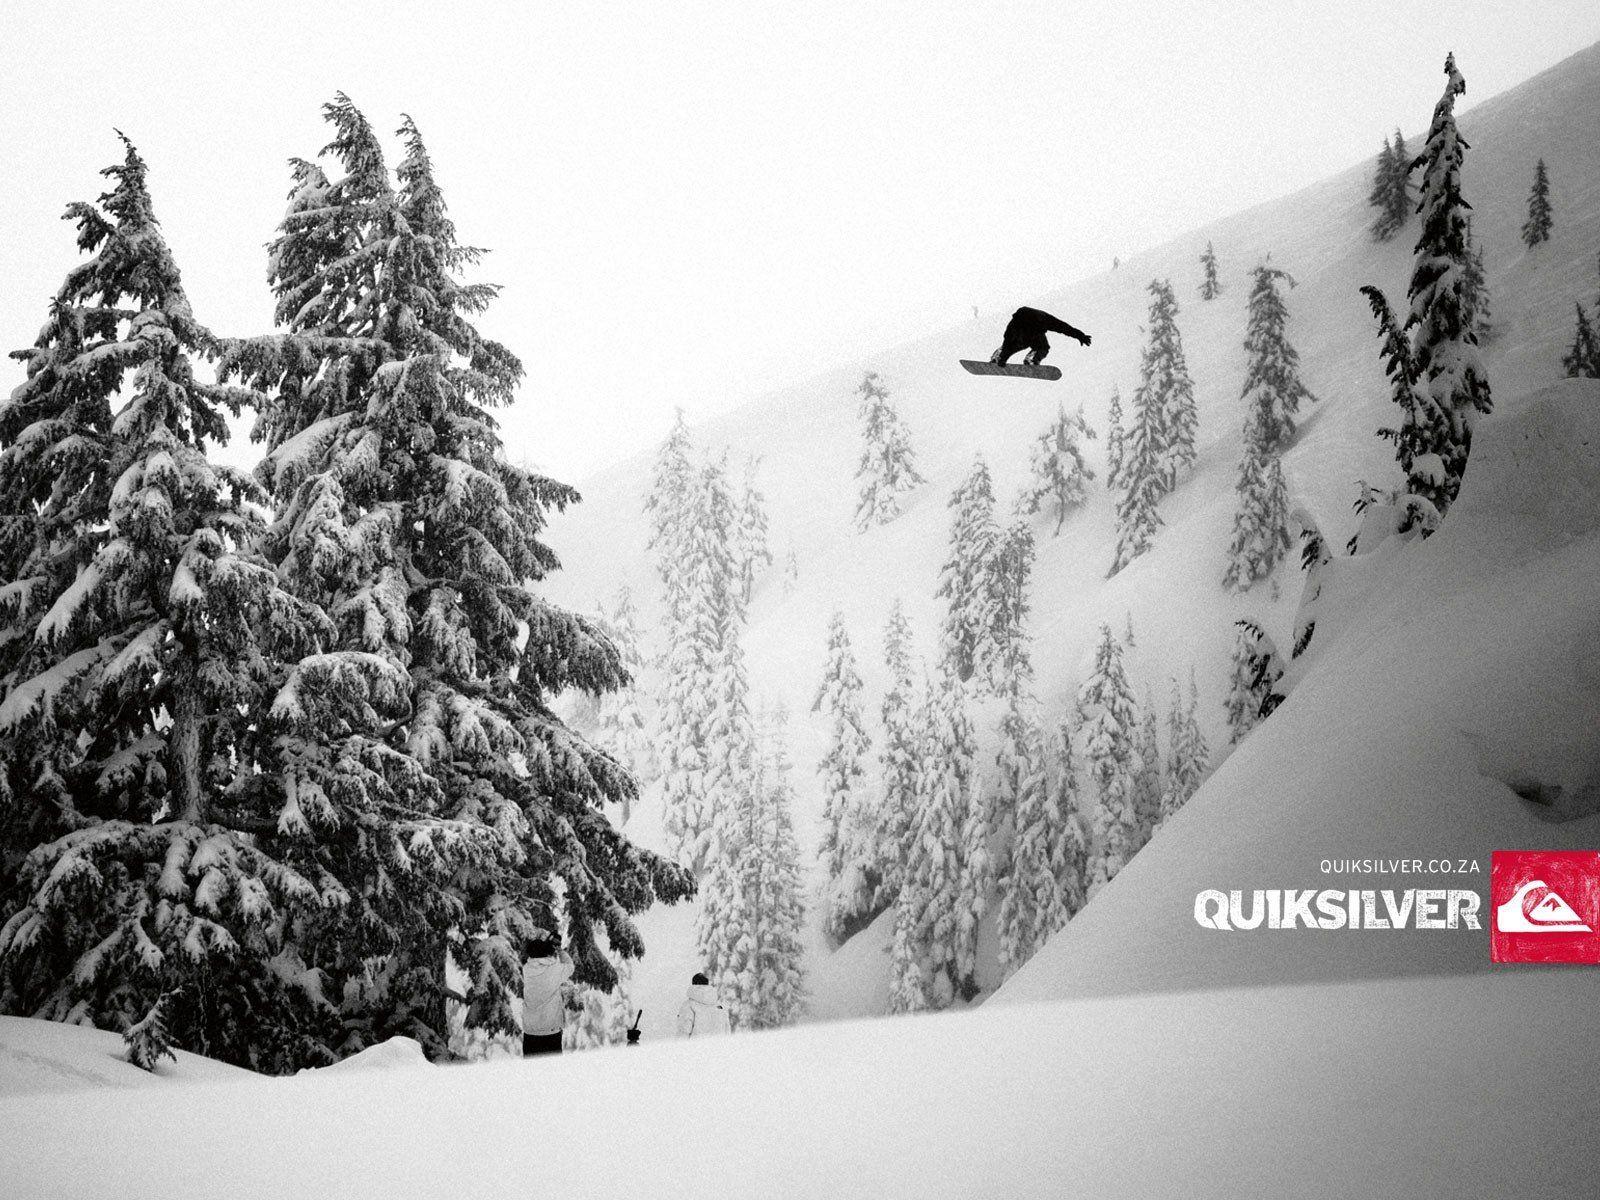 Download 1600x1200 snow snowboarding Quiksilver wallpaper